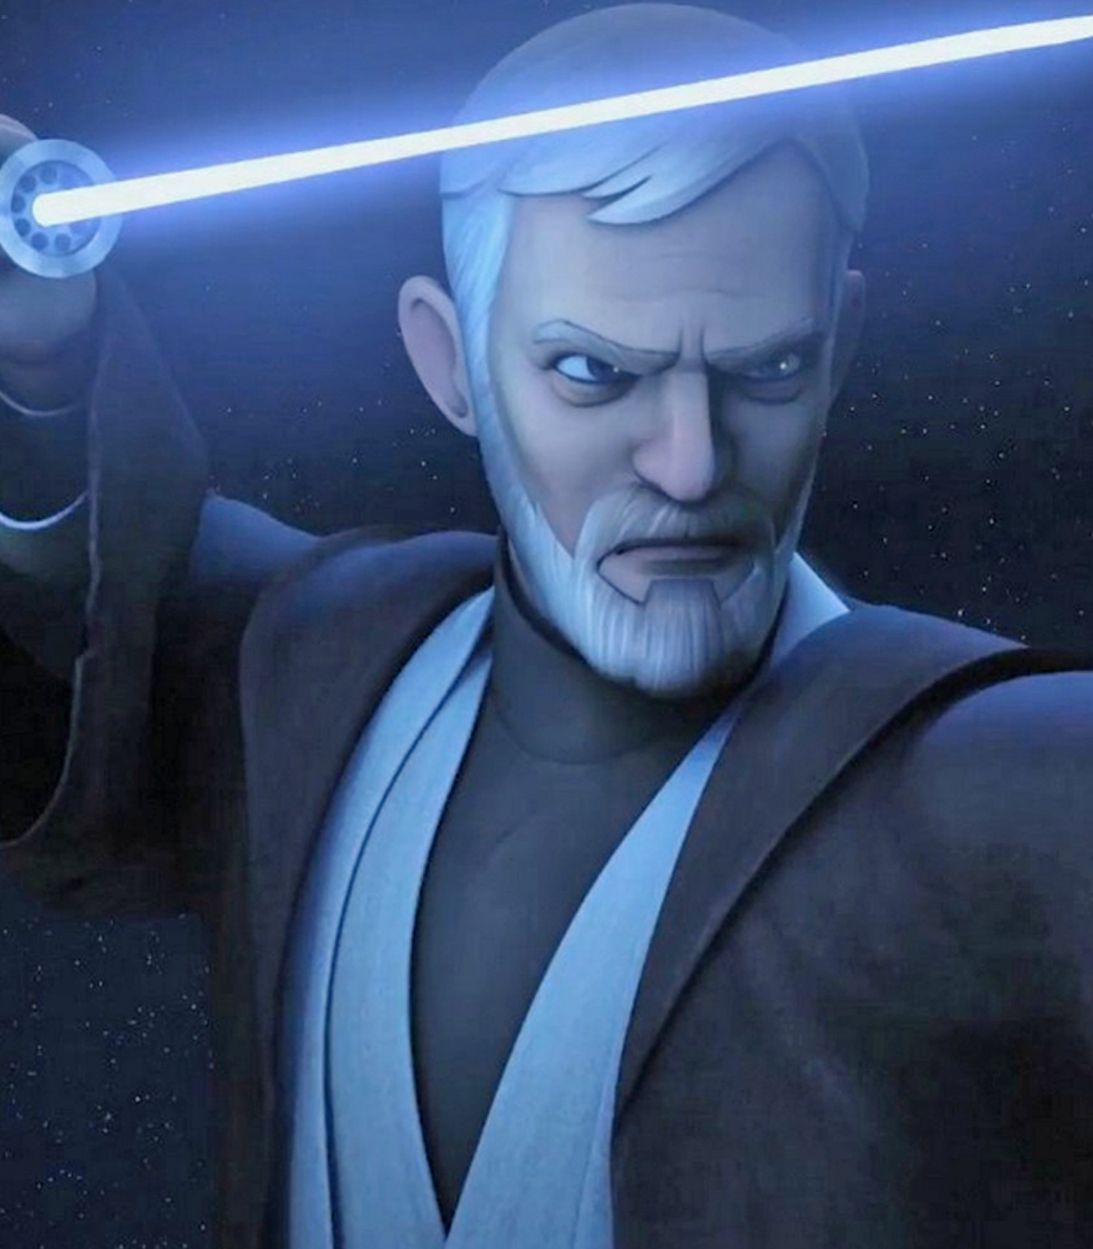 Obi-Wan Kenobi Star Wars Rebels